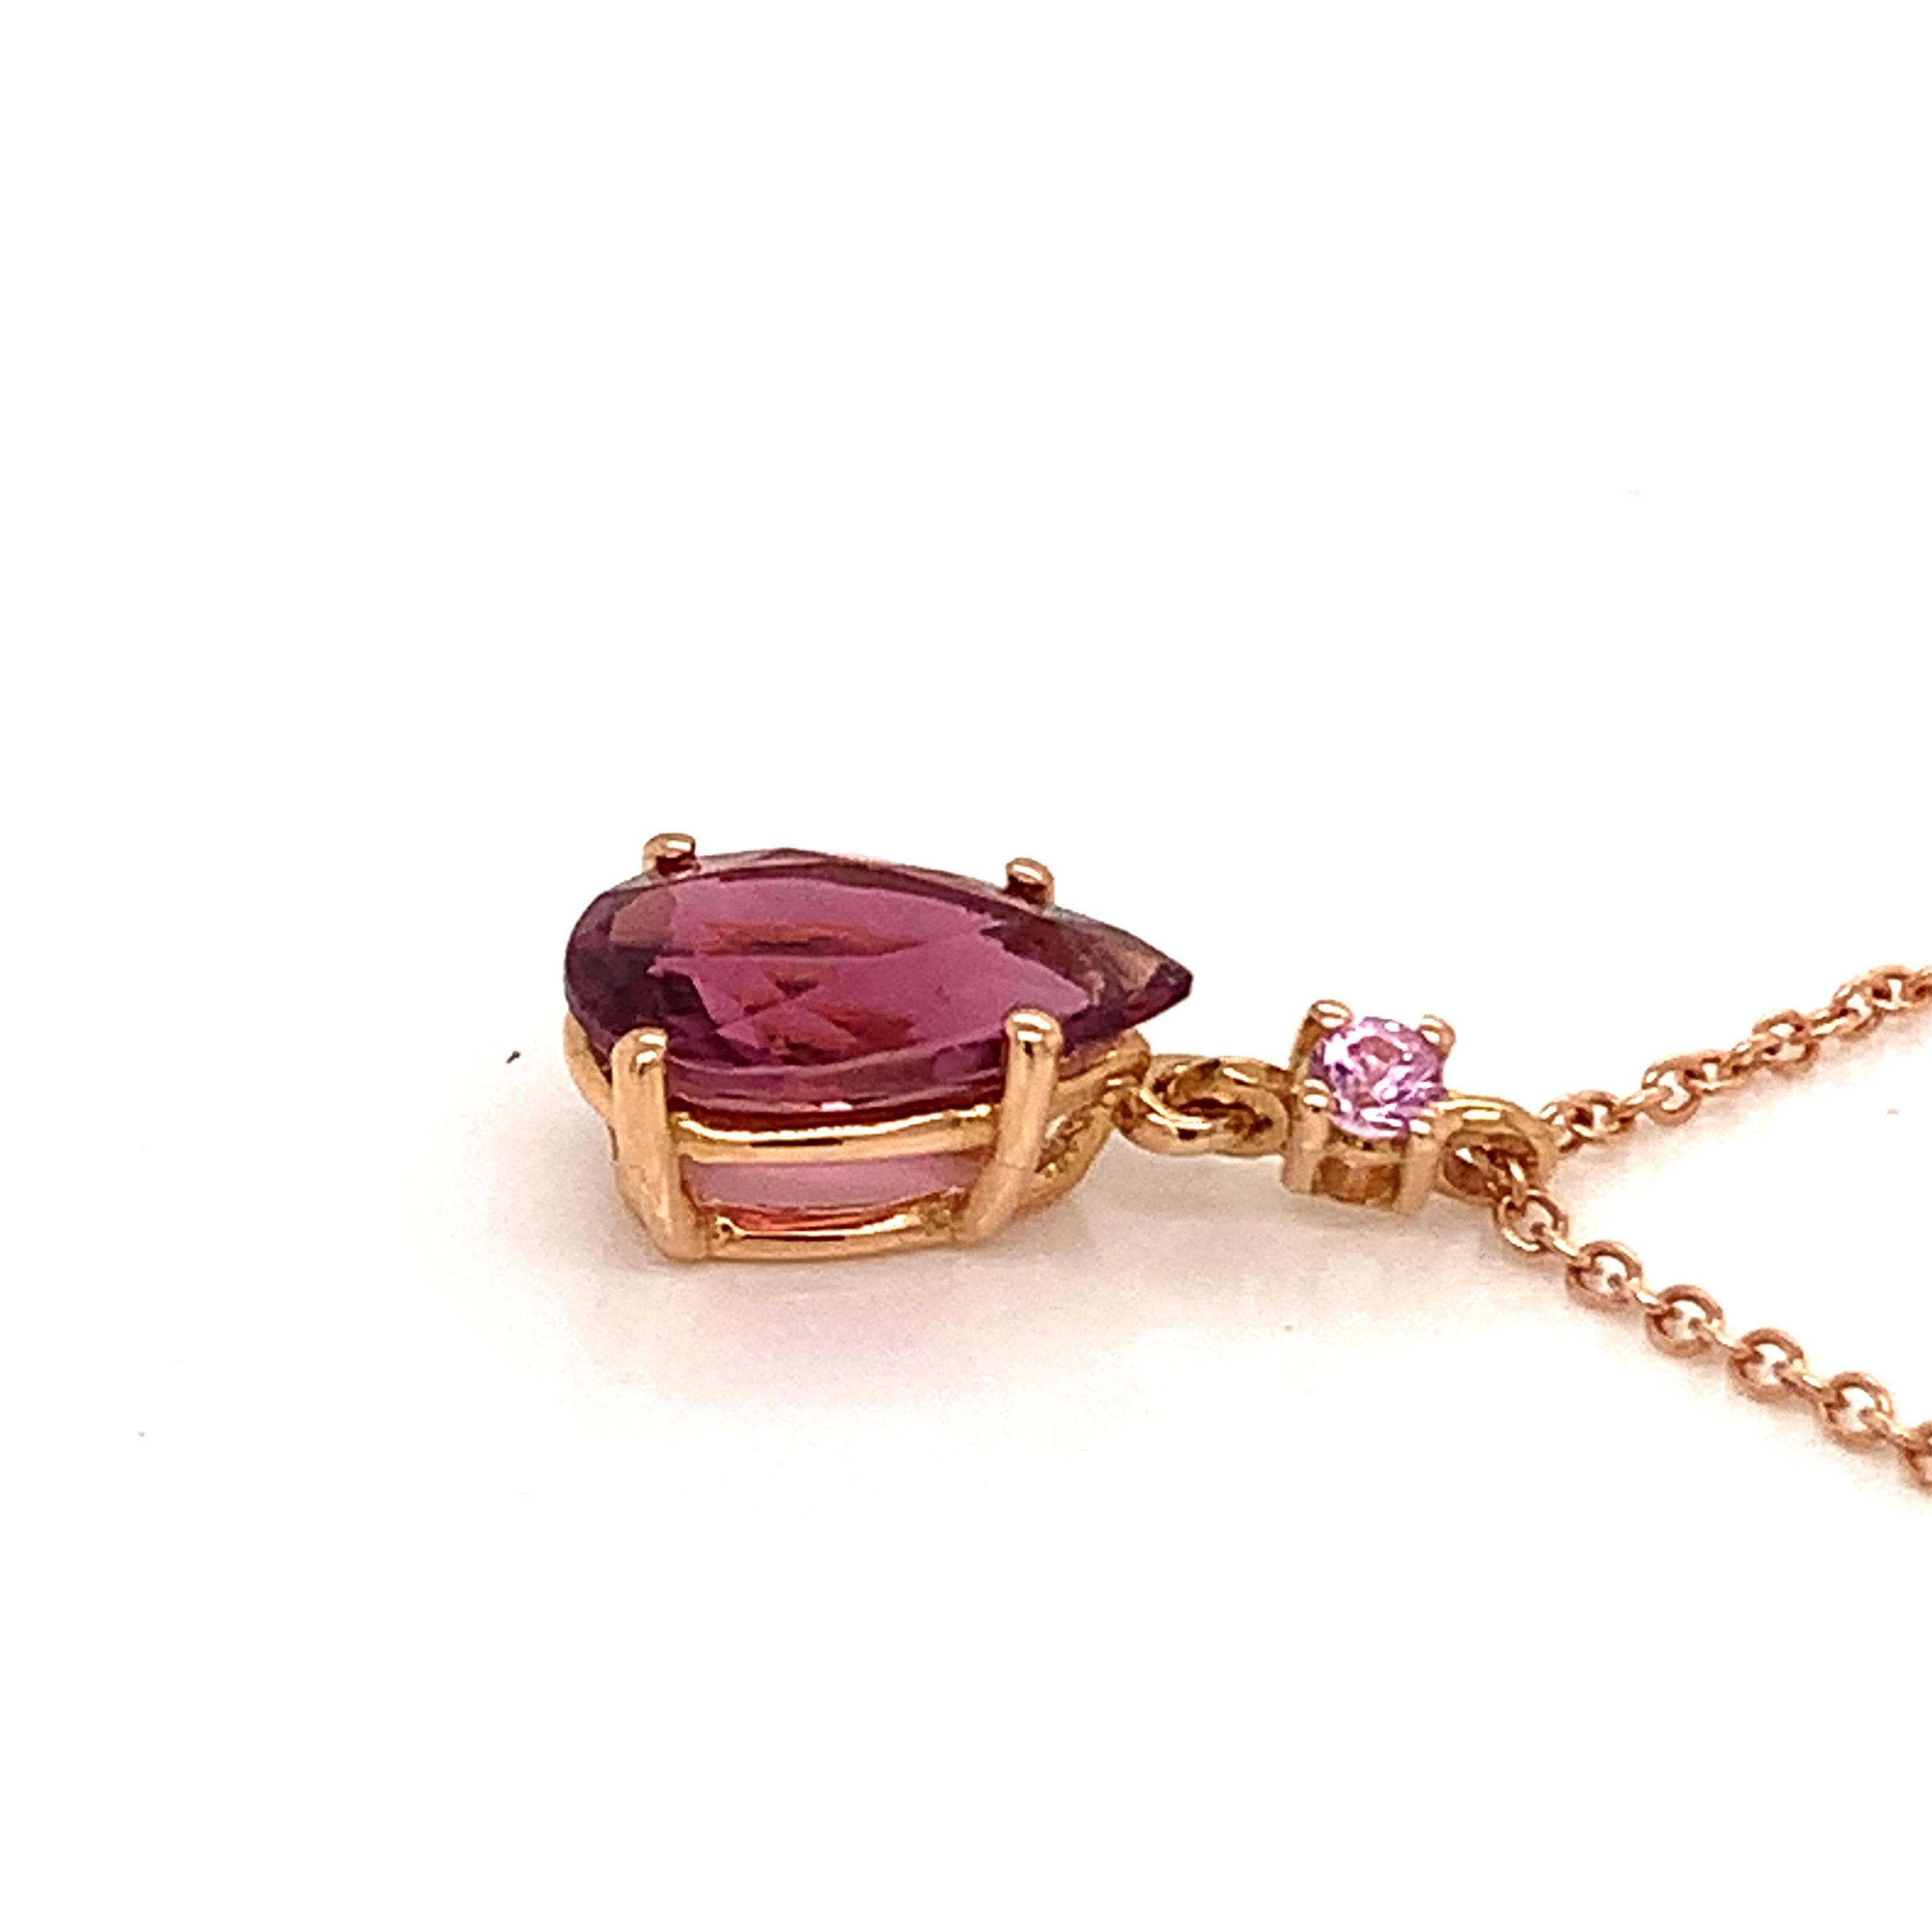 Contemporary 18 Karat Rose Gold Pink Tourmaline Garavelli Pendant with Chain